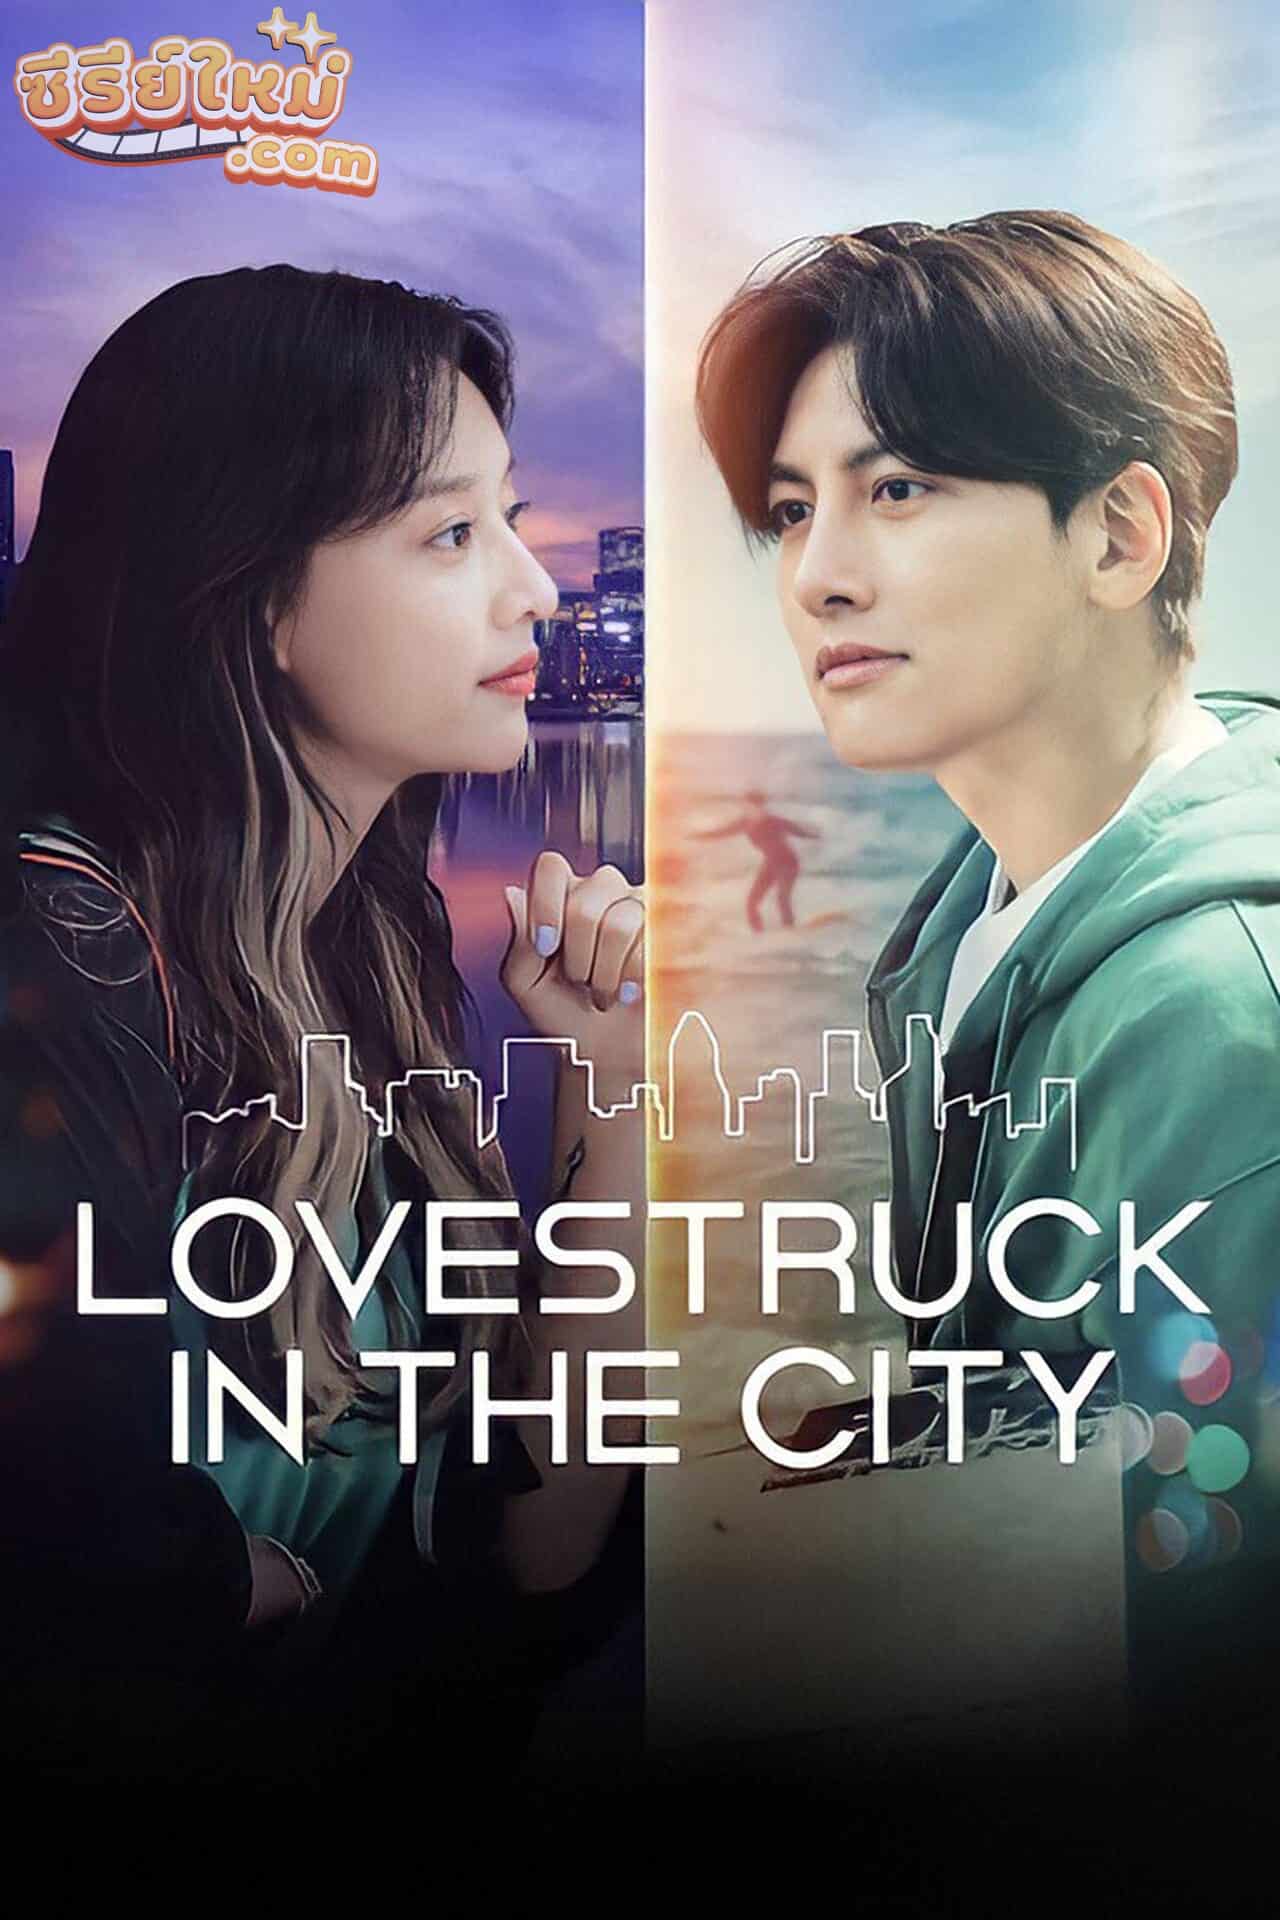 Lovestruck in the City ความรักในเมืองใหญ่ (2020)